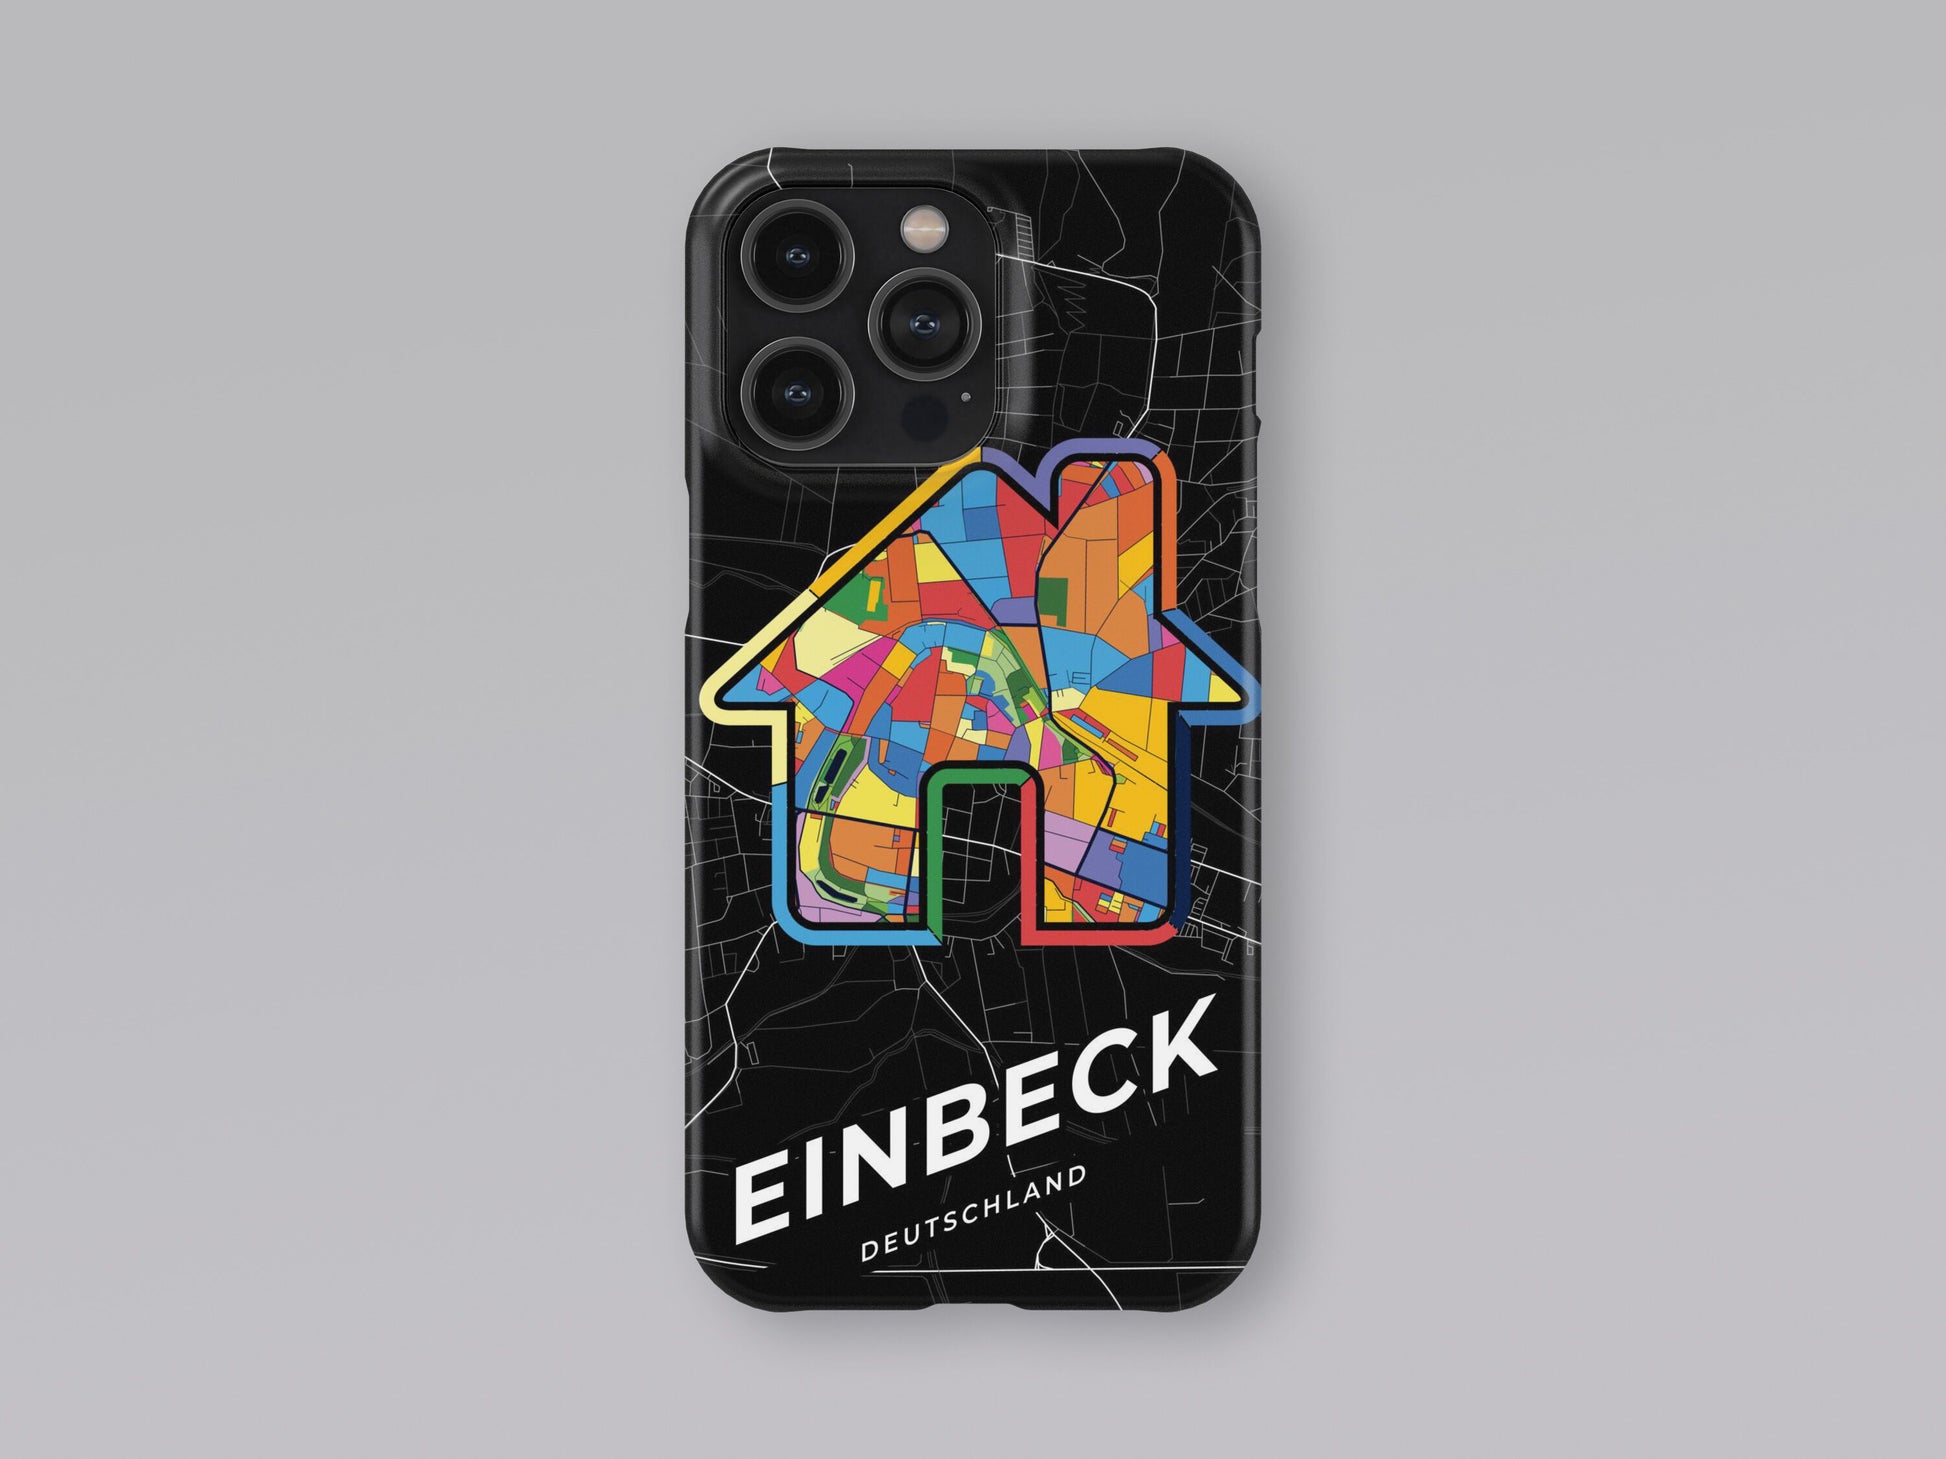 Einbeck Deutschland slim phone case with colorful icon. Birthday, wedding or housewarming gift. Couple match cases. 3